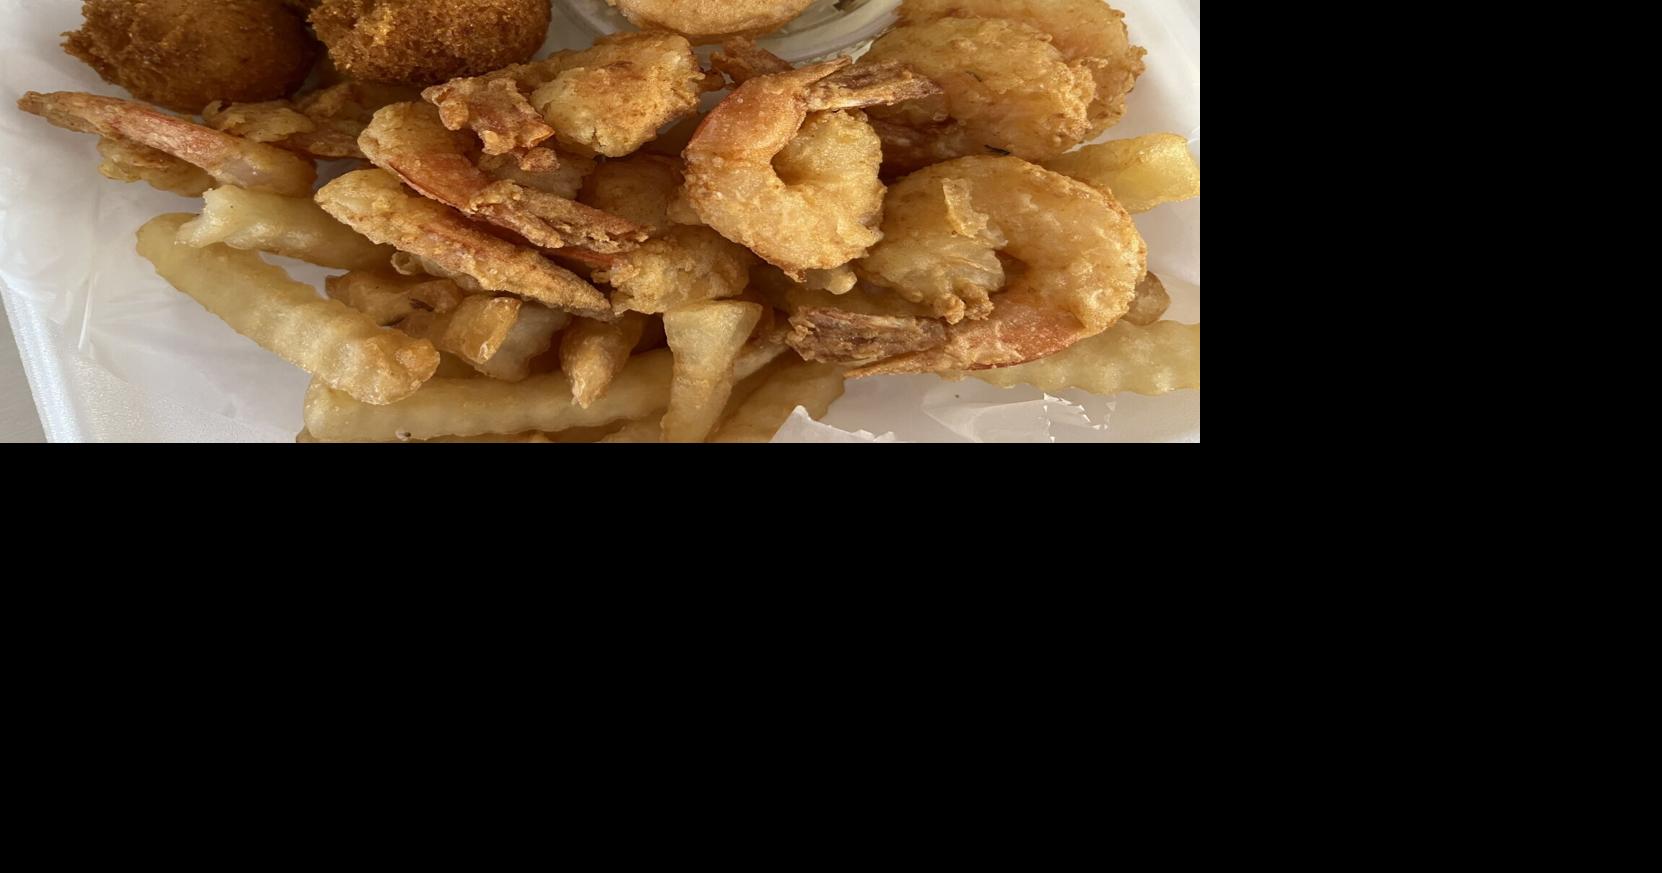 CHUNKY SHOALS FISH CAMP - Restaurant Reviews & Photos - Tripadvisor